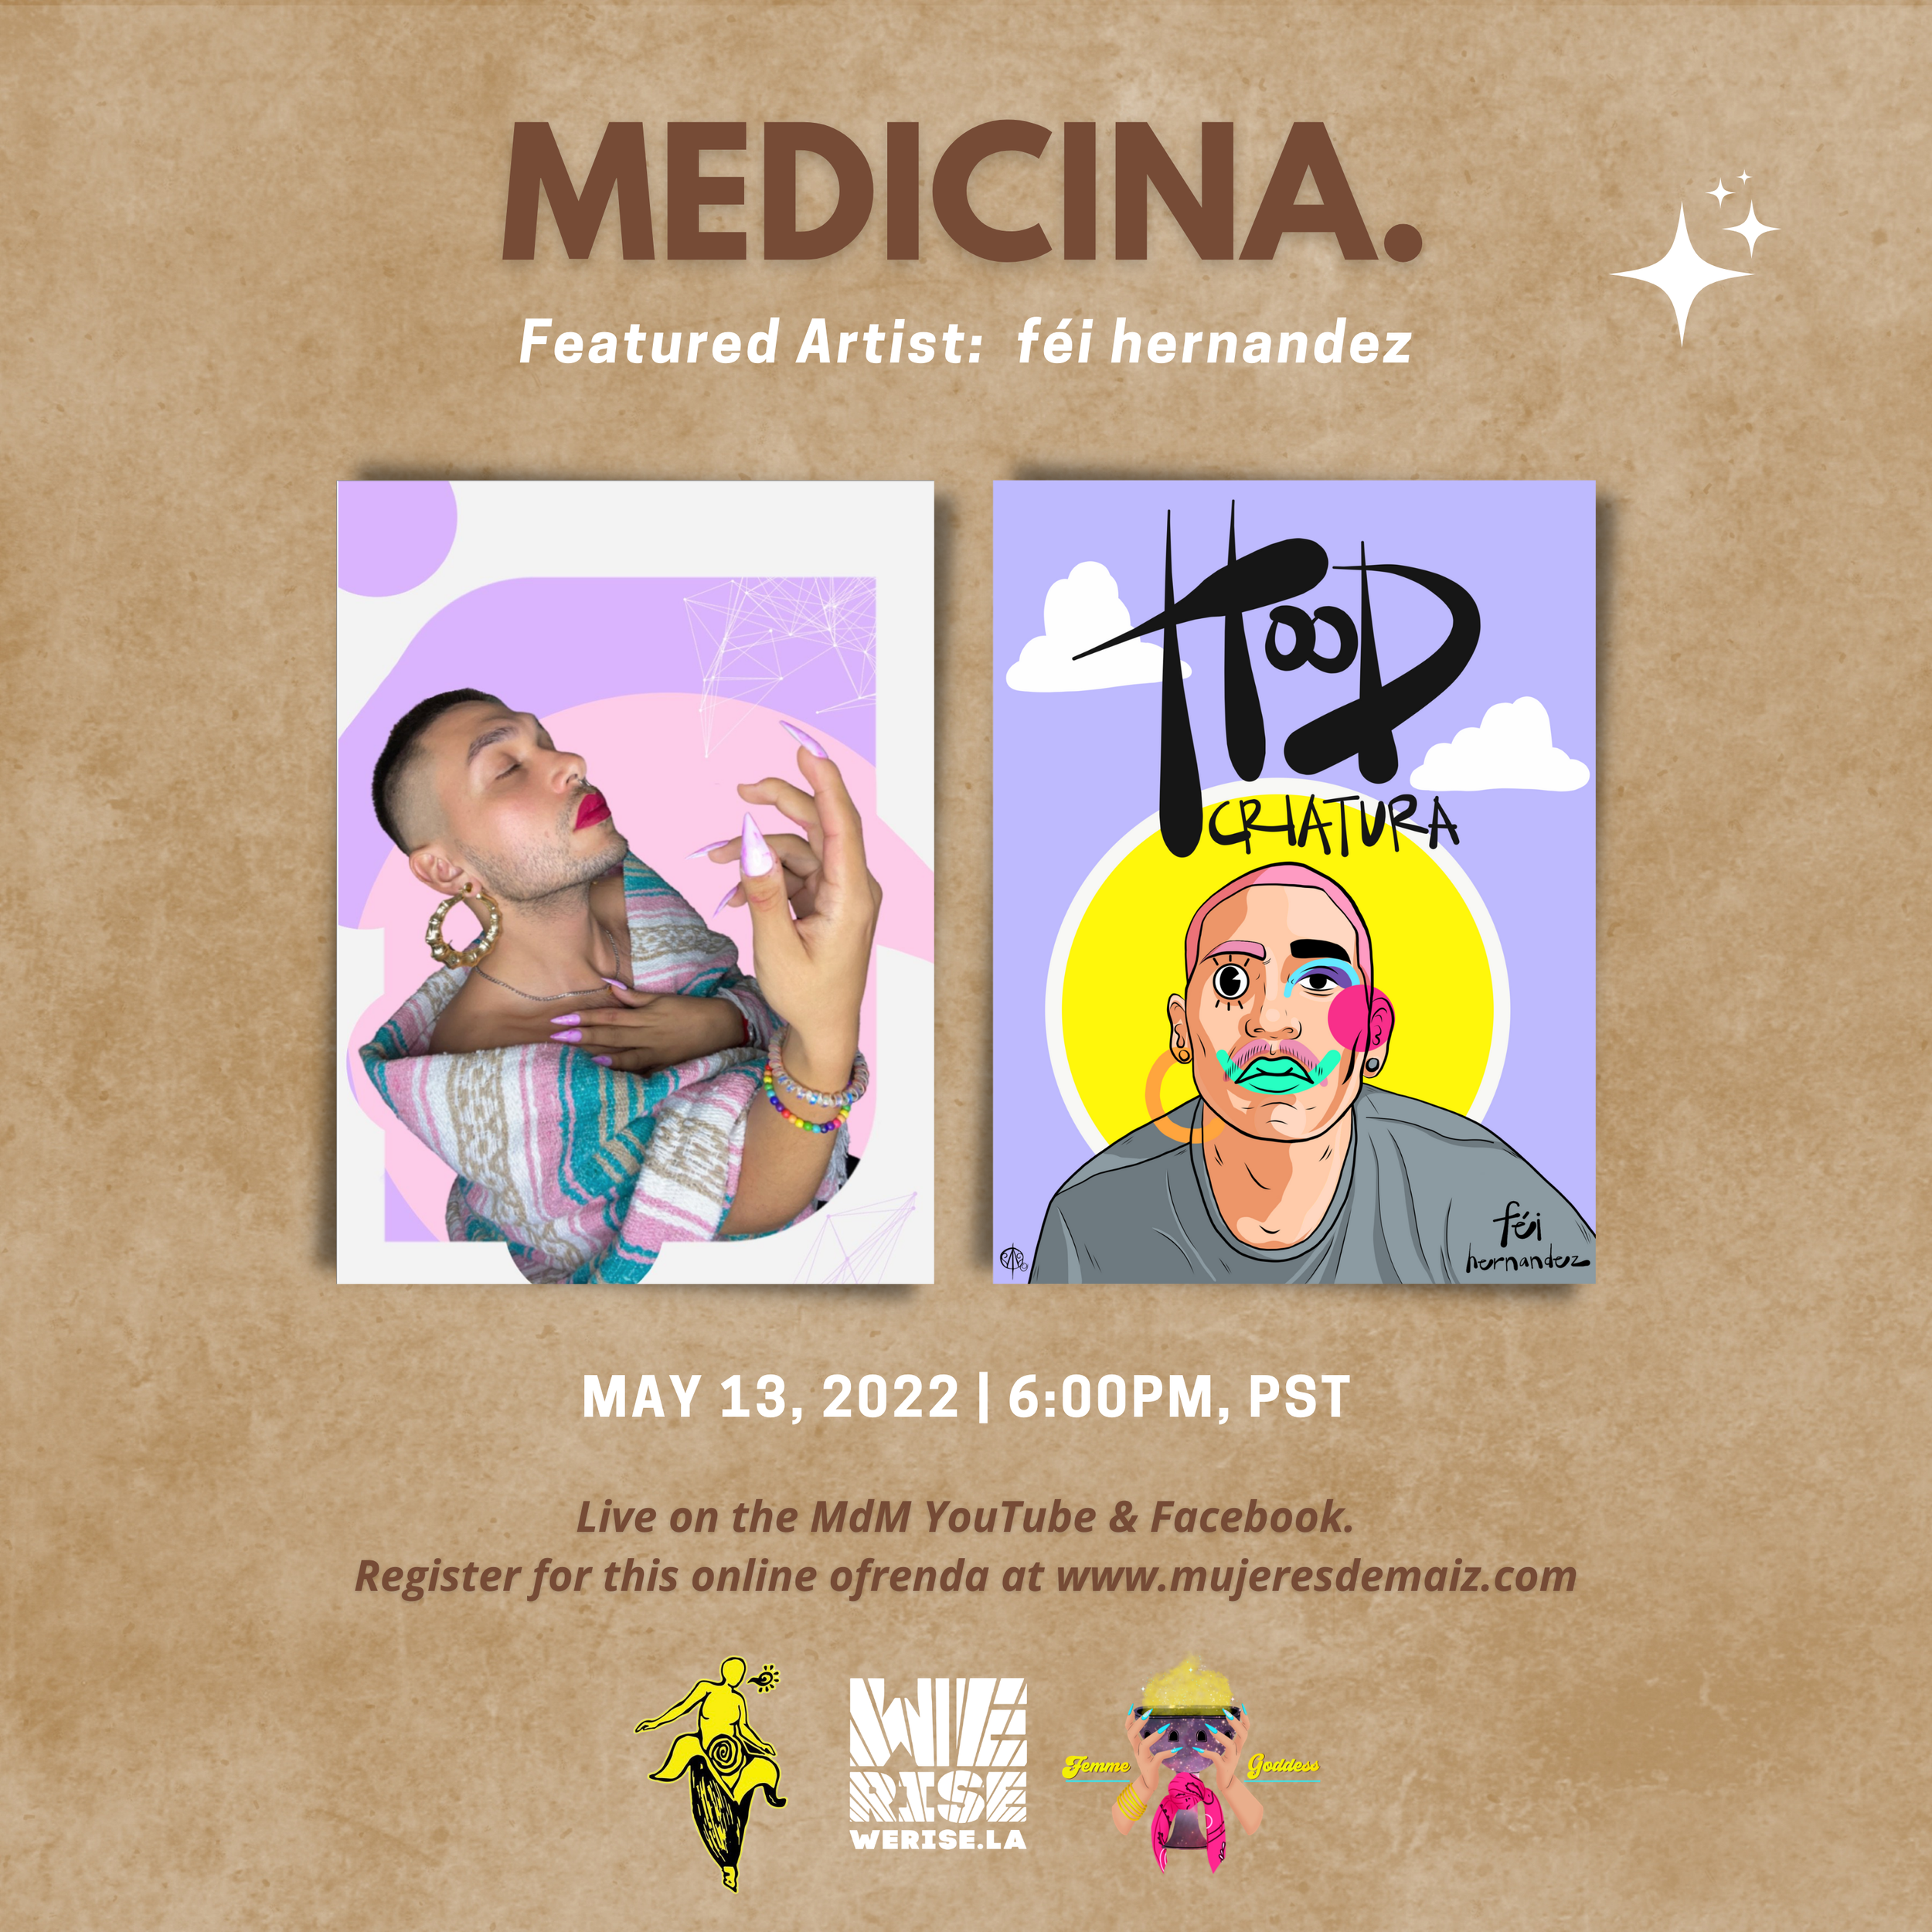 Medicina - Featured Artist.png